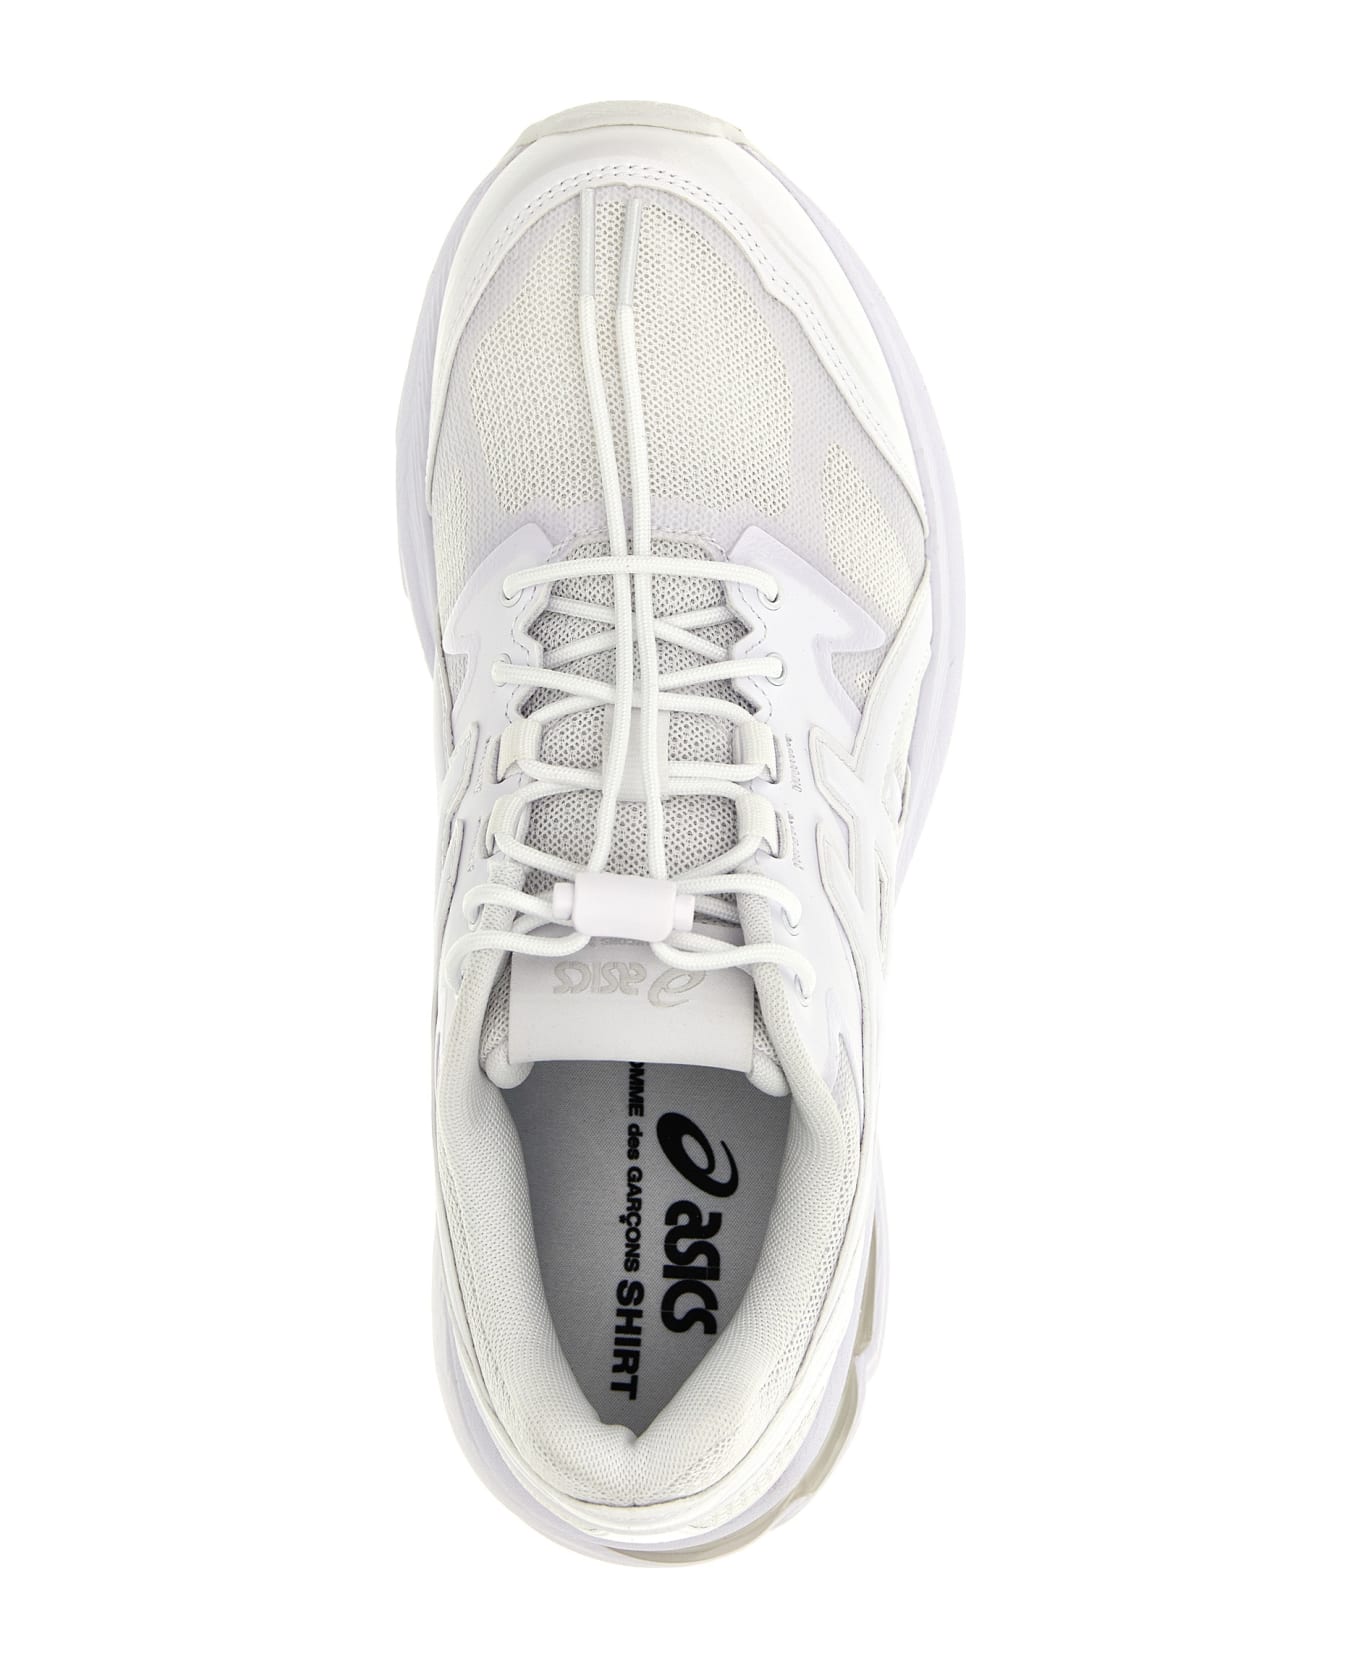 Comme des Garçons Shirt 'gel-terrain' Sneakers - Bianco